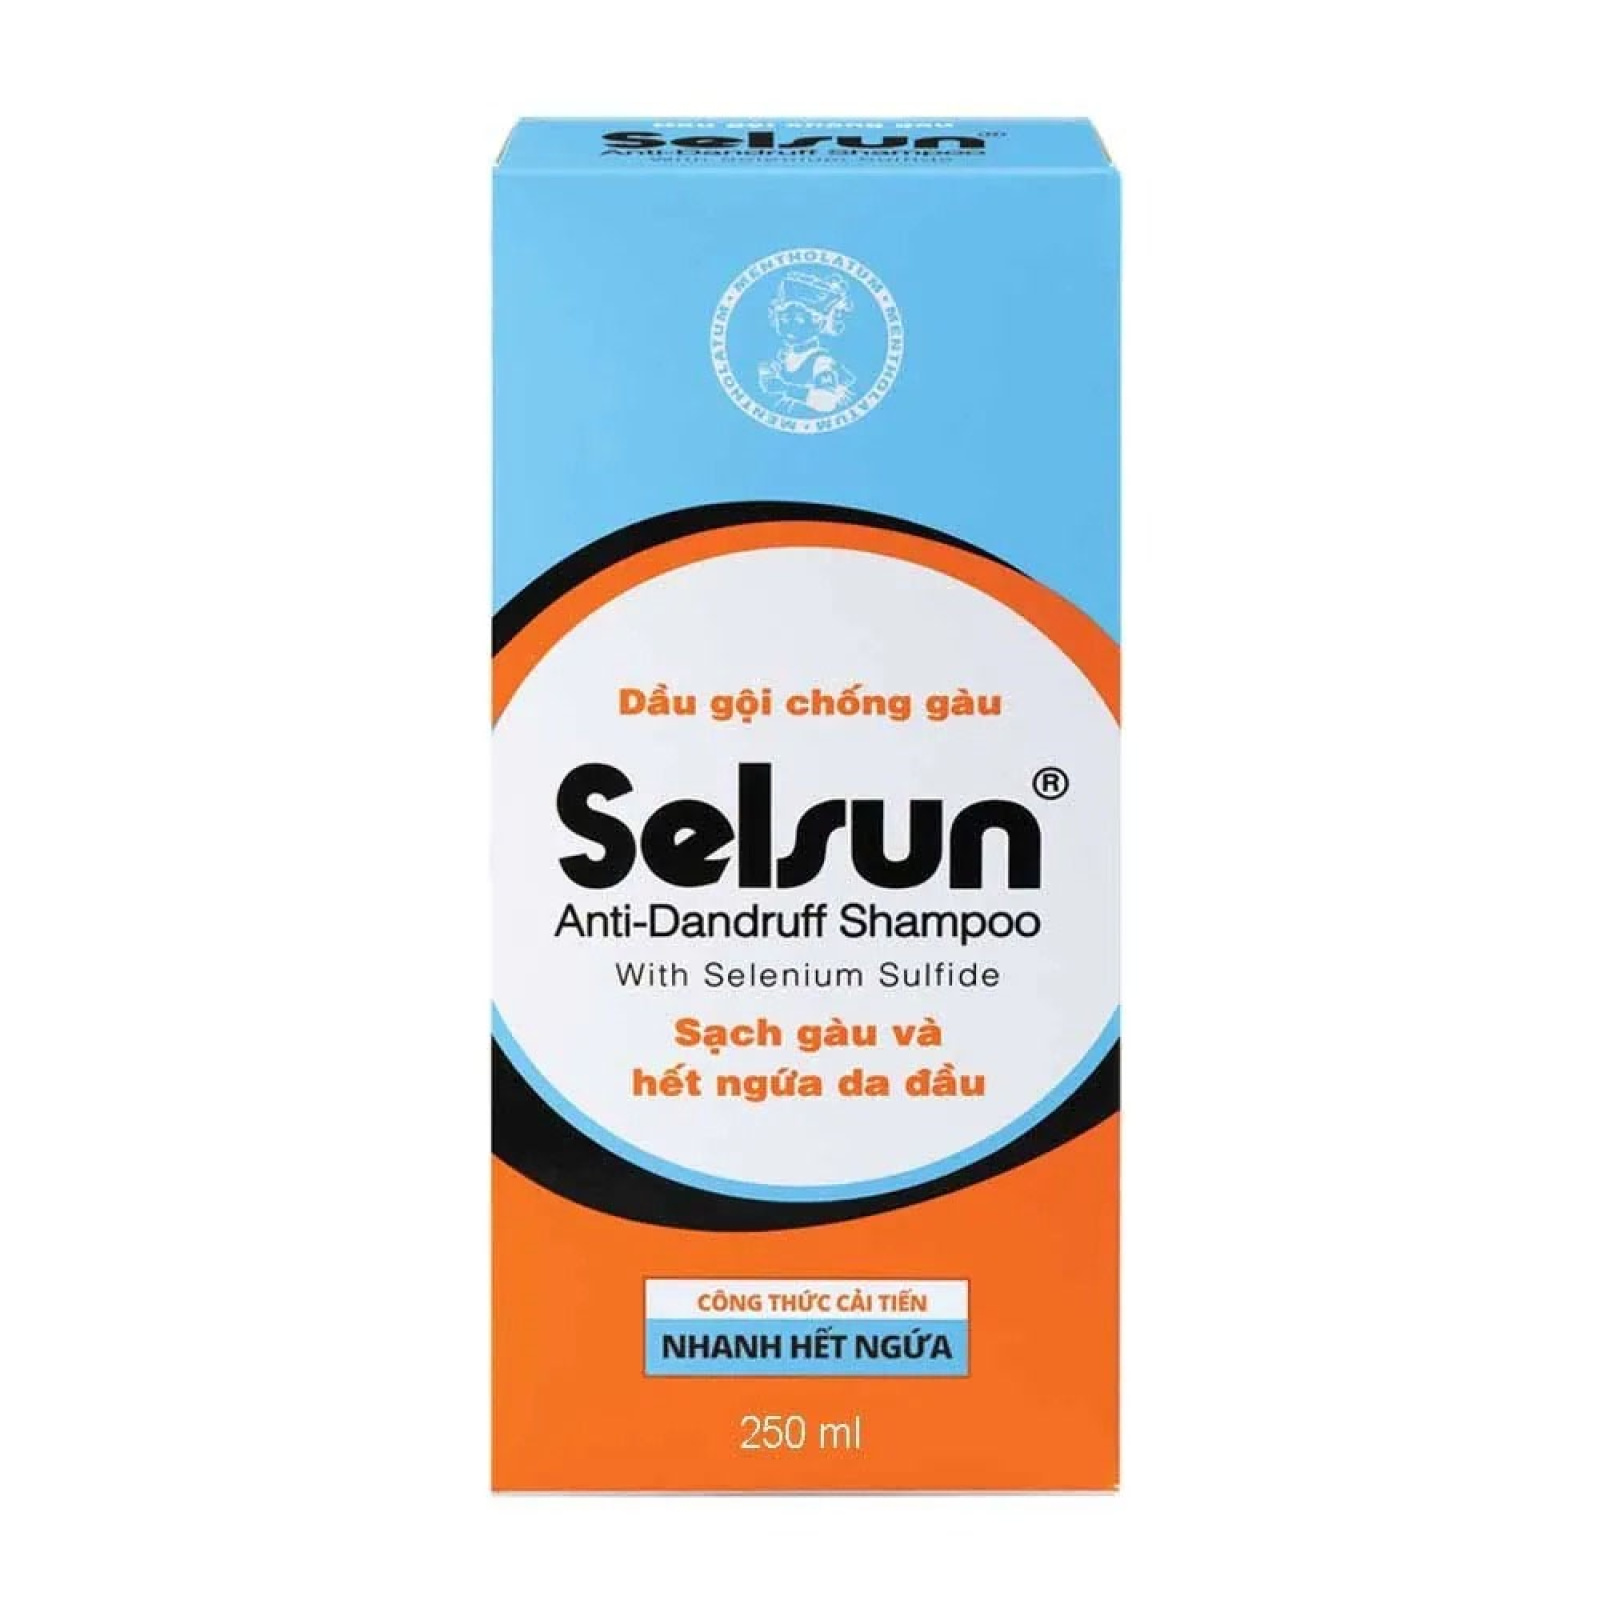 Dầu gội dược liệu Selsun 50-100ml